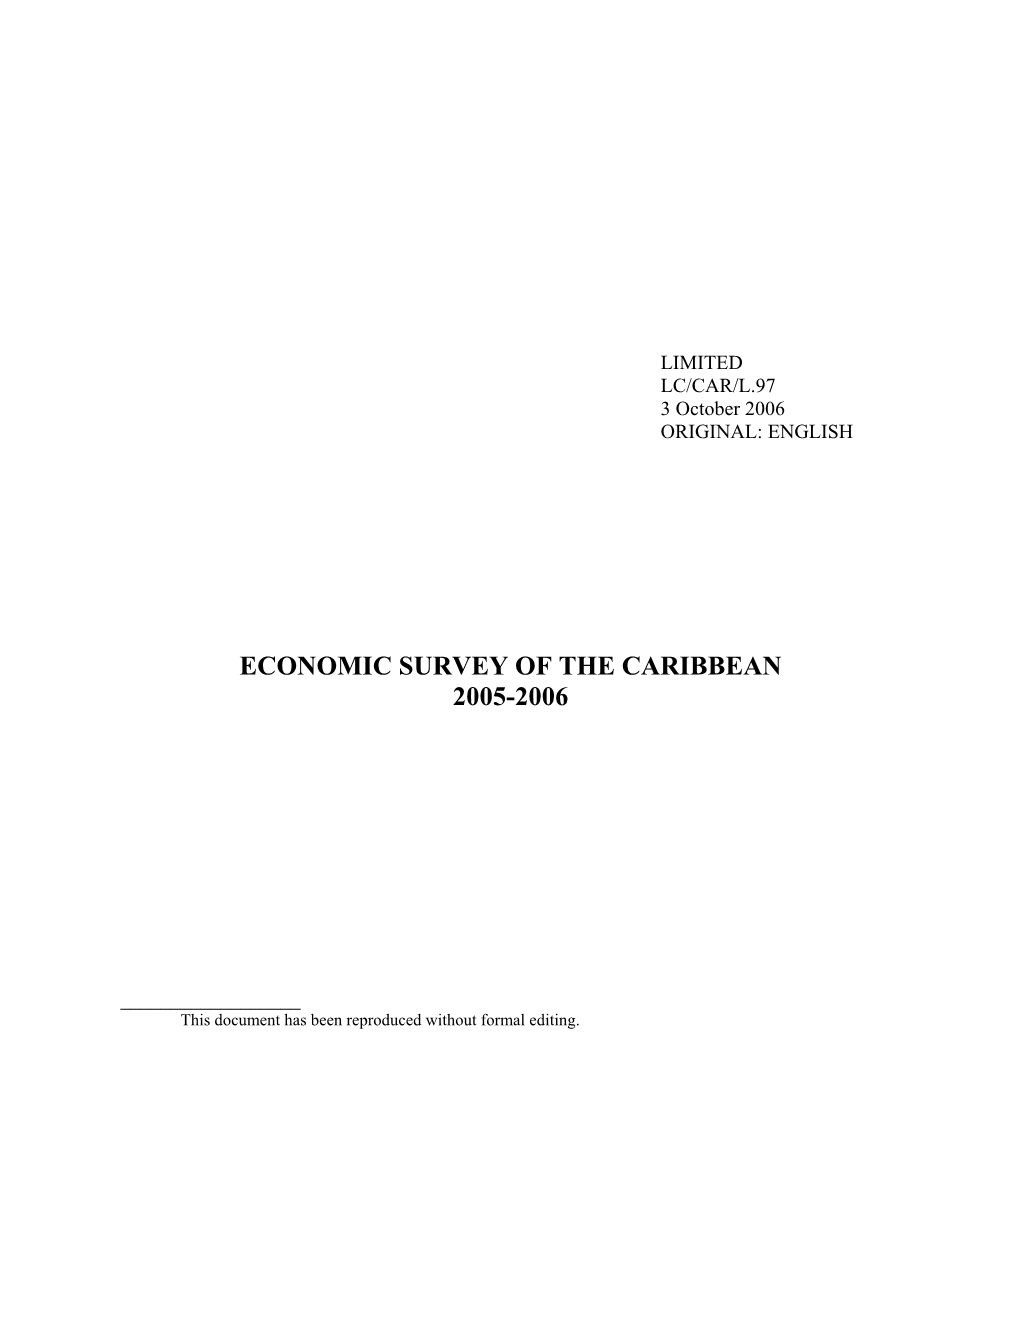 Economic Survey of the Caribbean 2005-2006